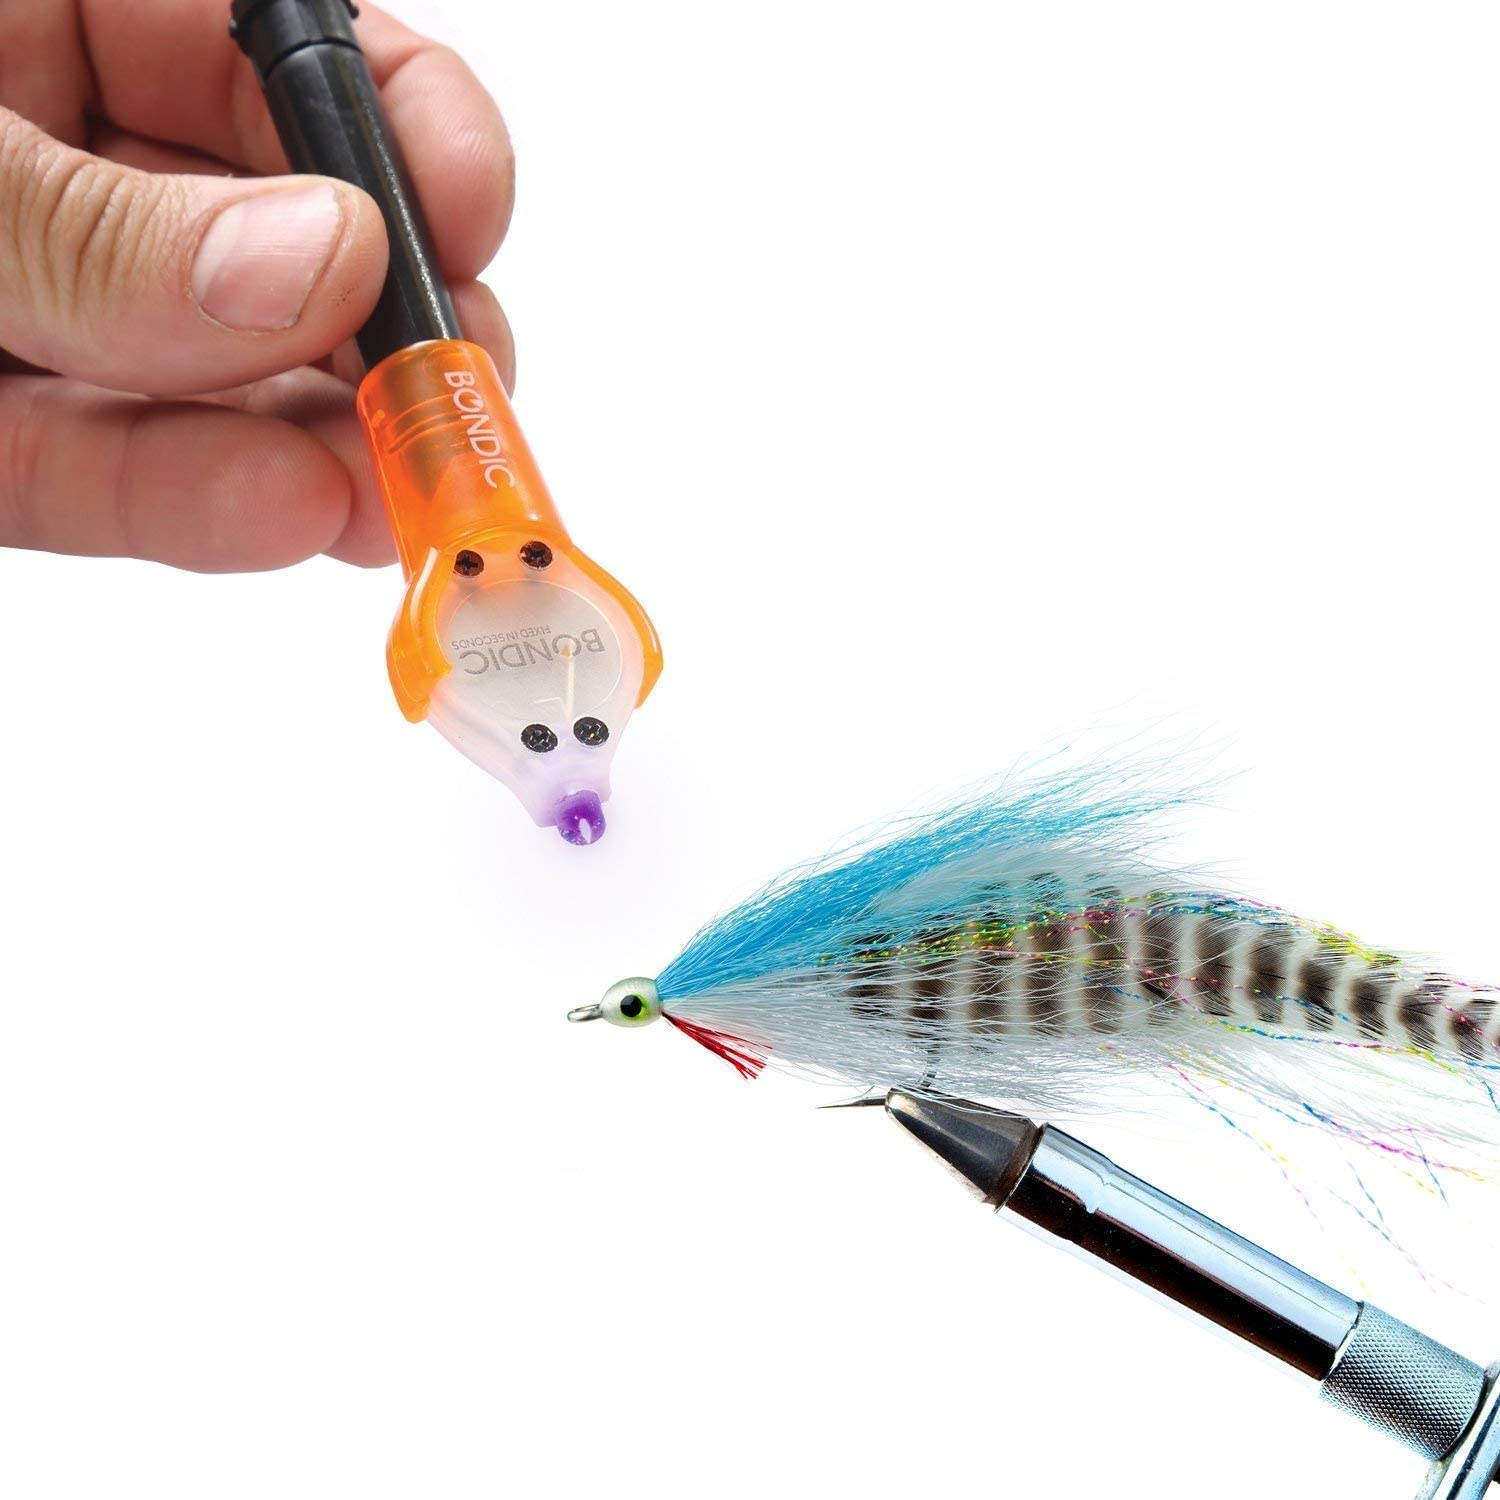 Bondic Fly Fishing Repair Tool for Tying Flies